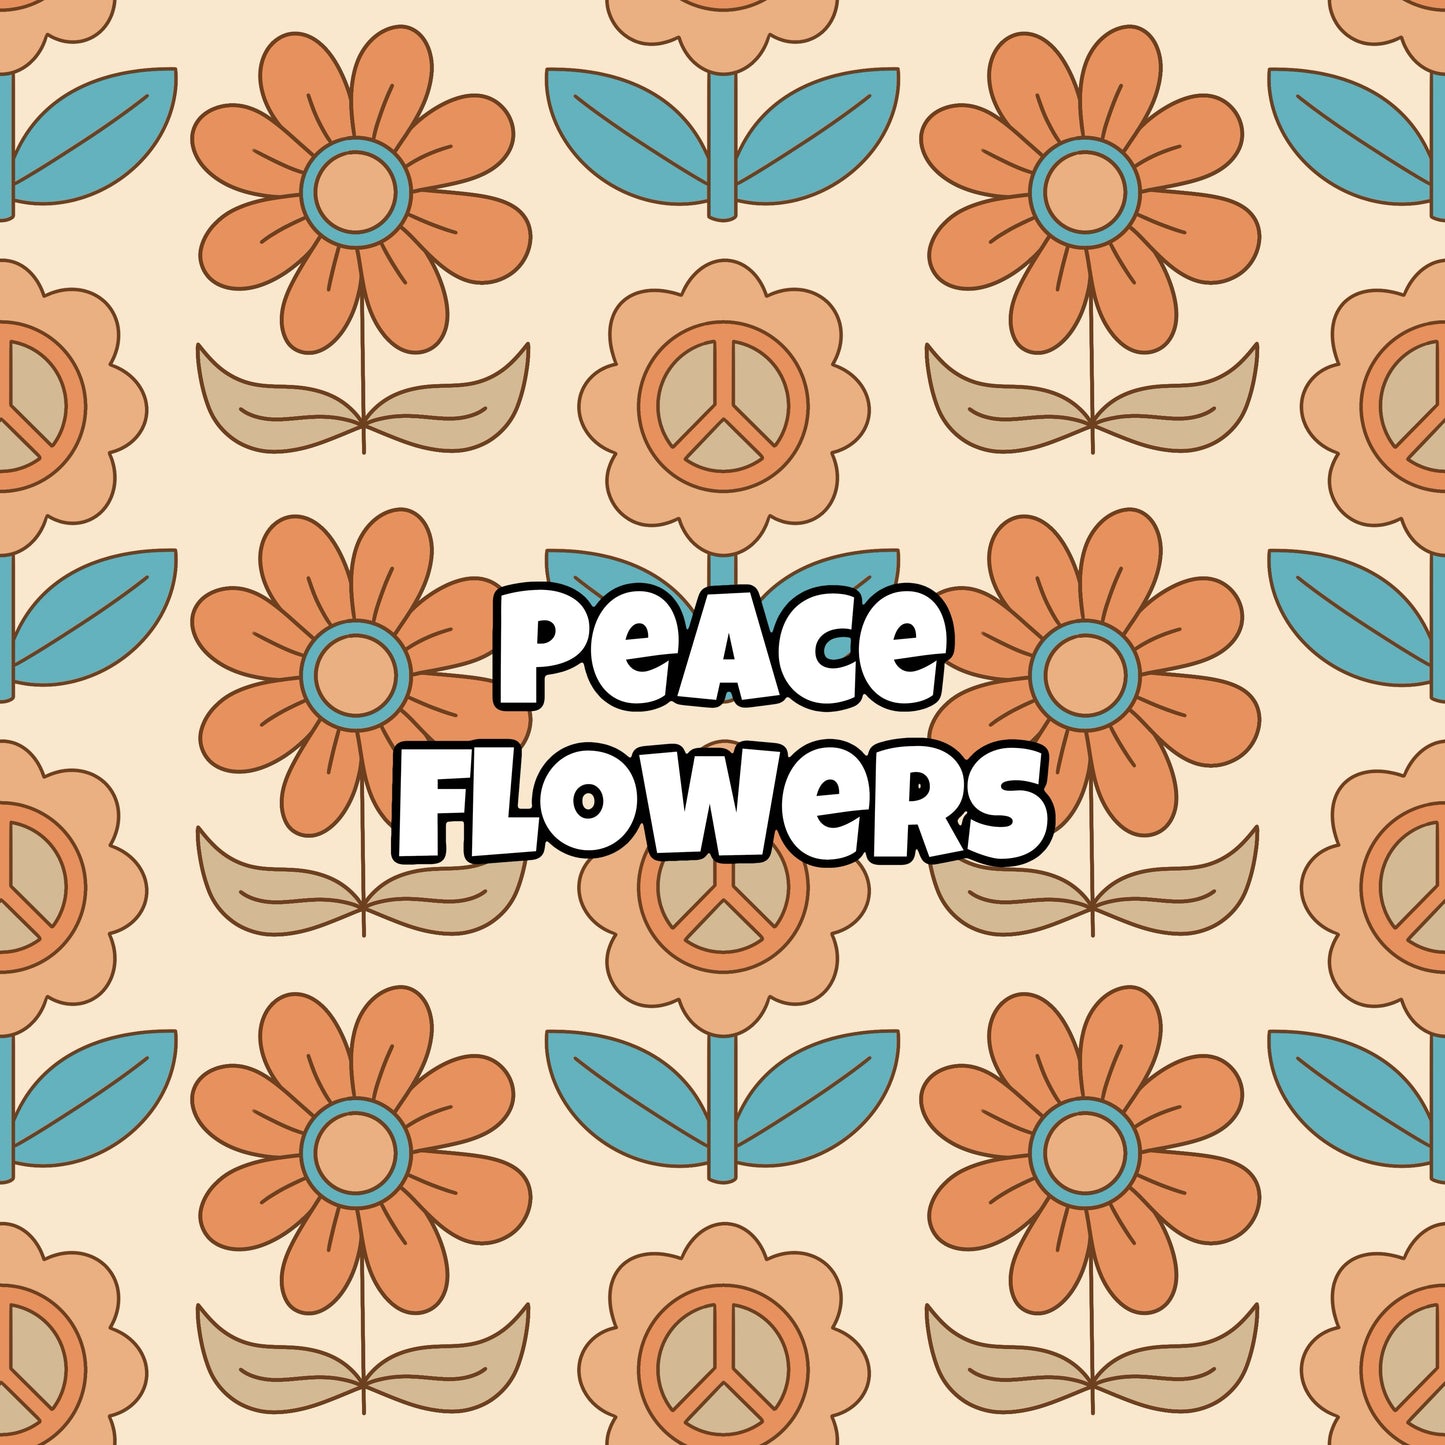 PEACE FLOWERS